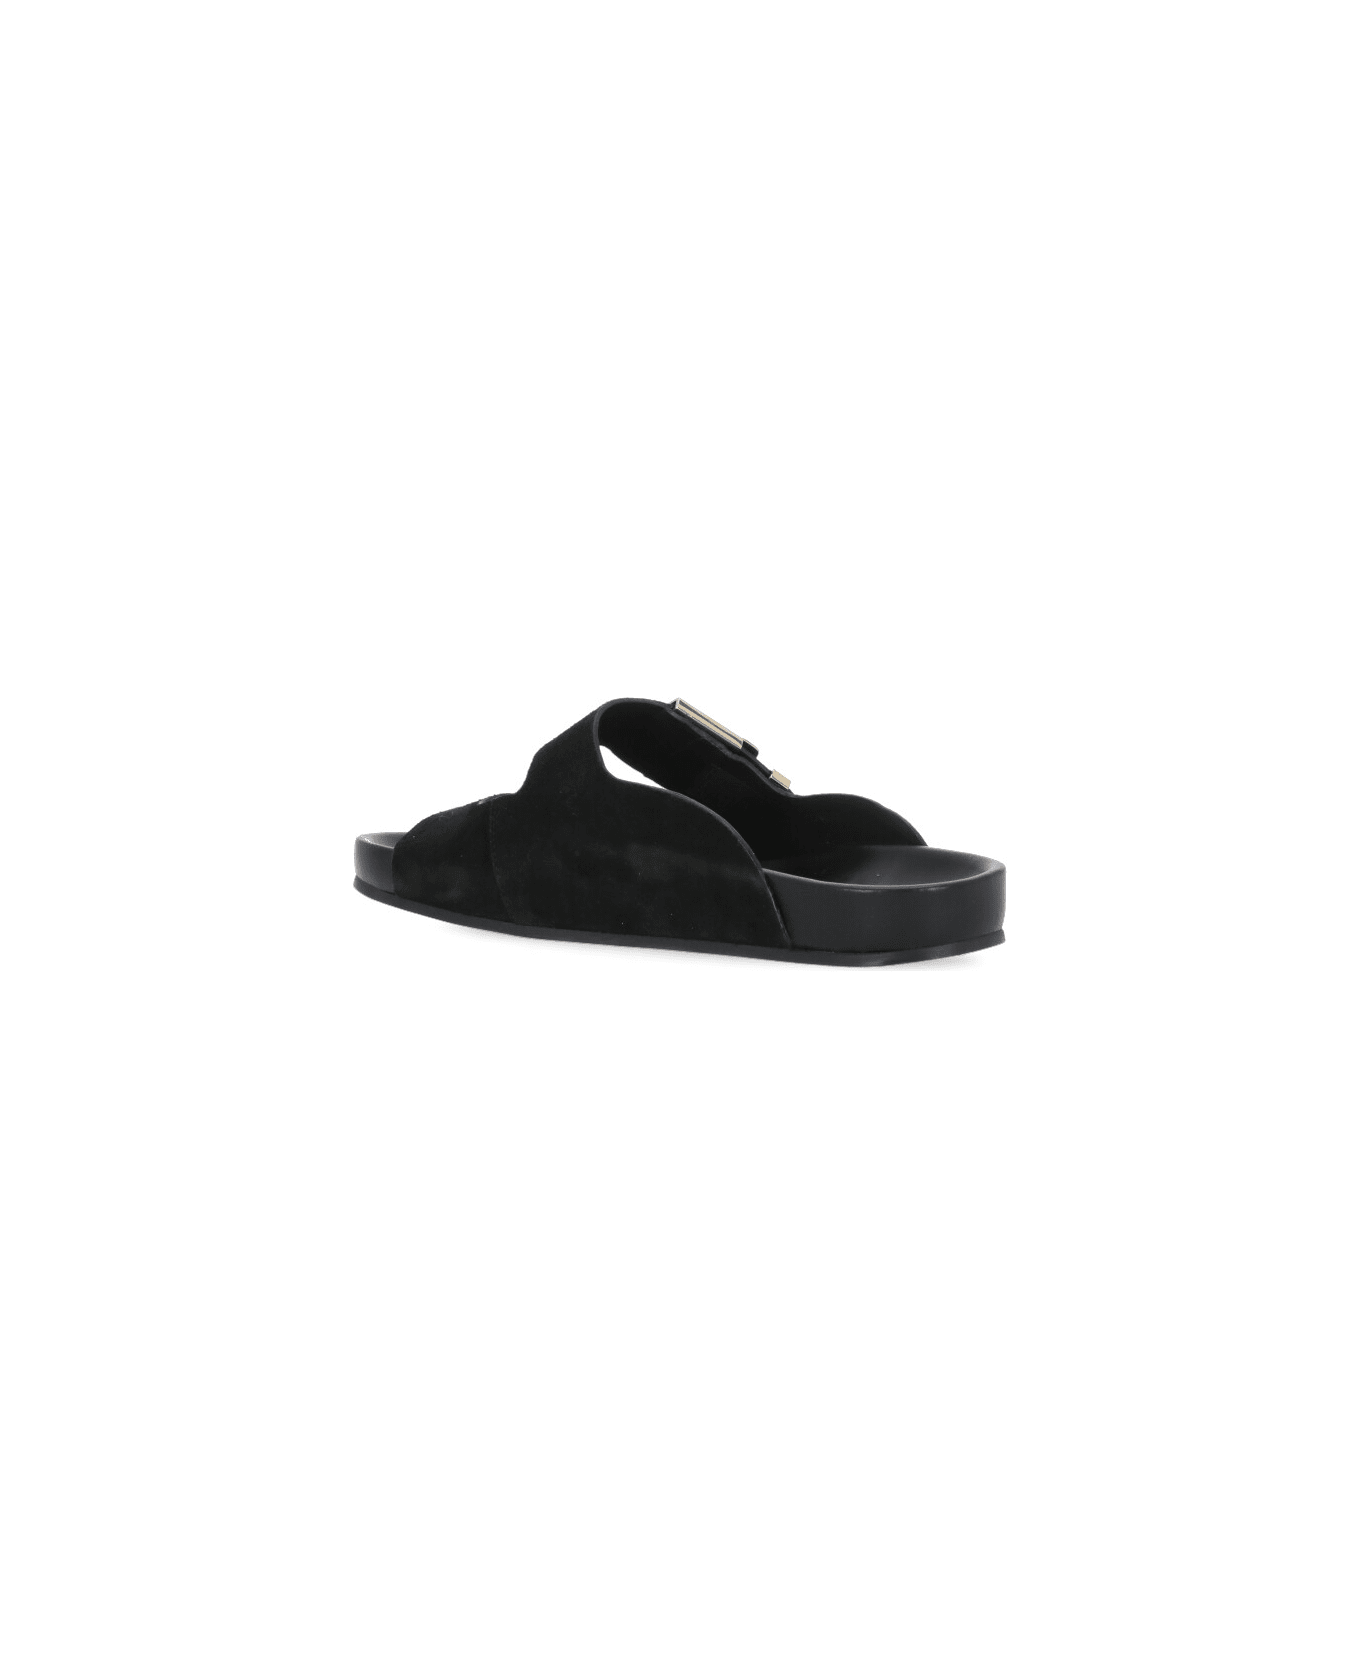 Lanvin Leather Slipper - Black